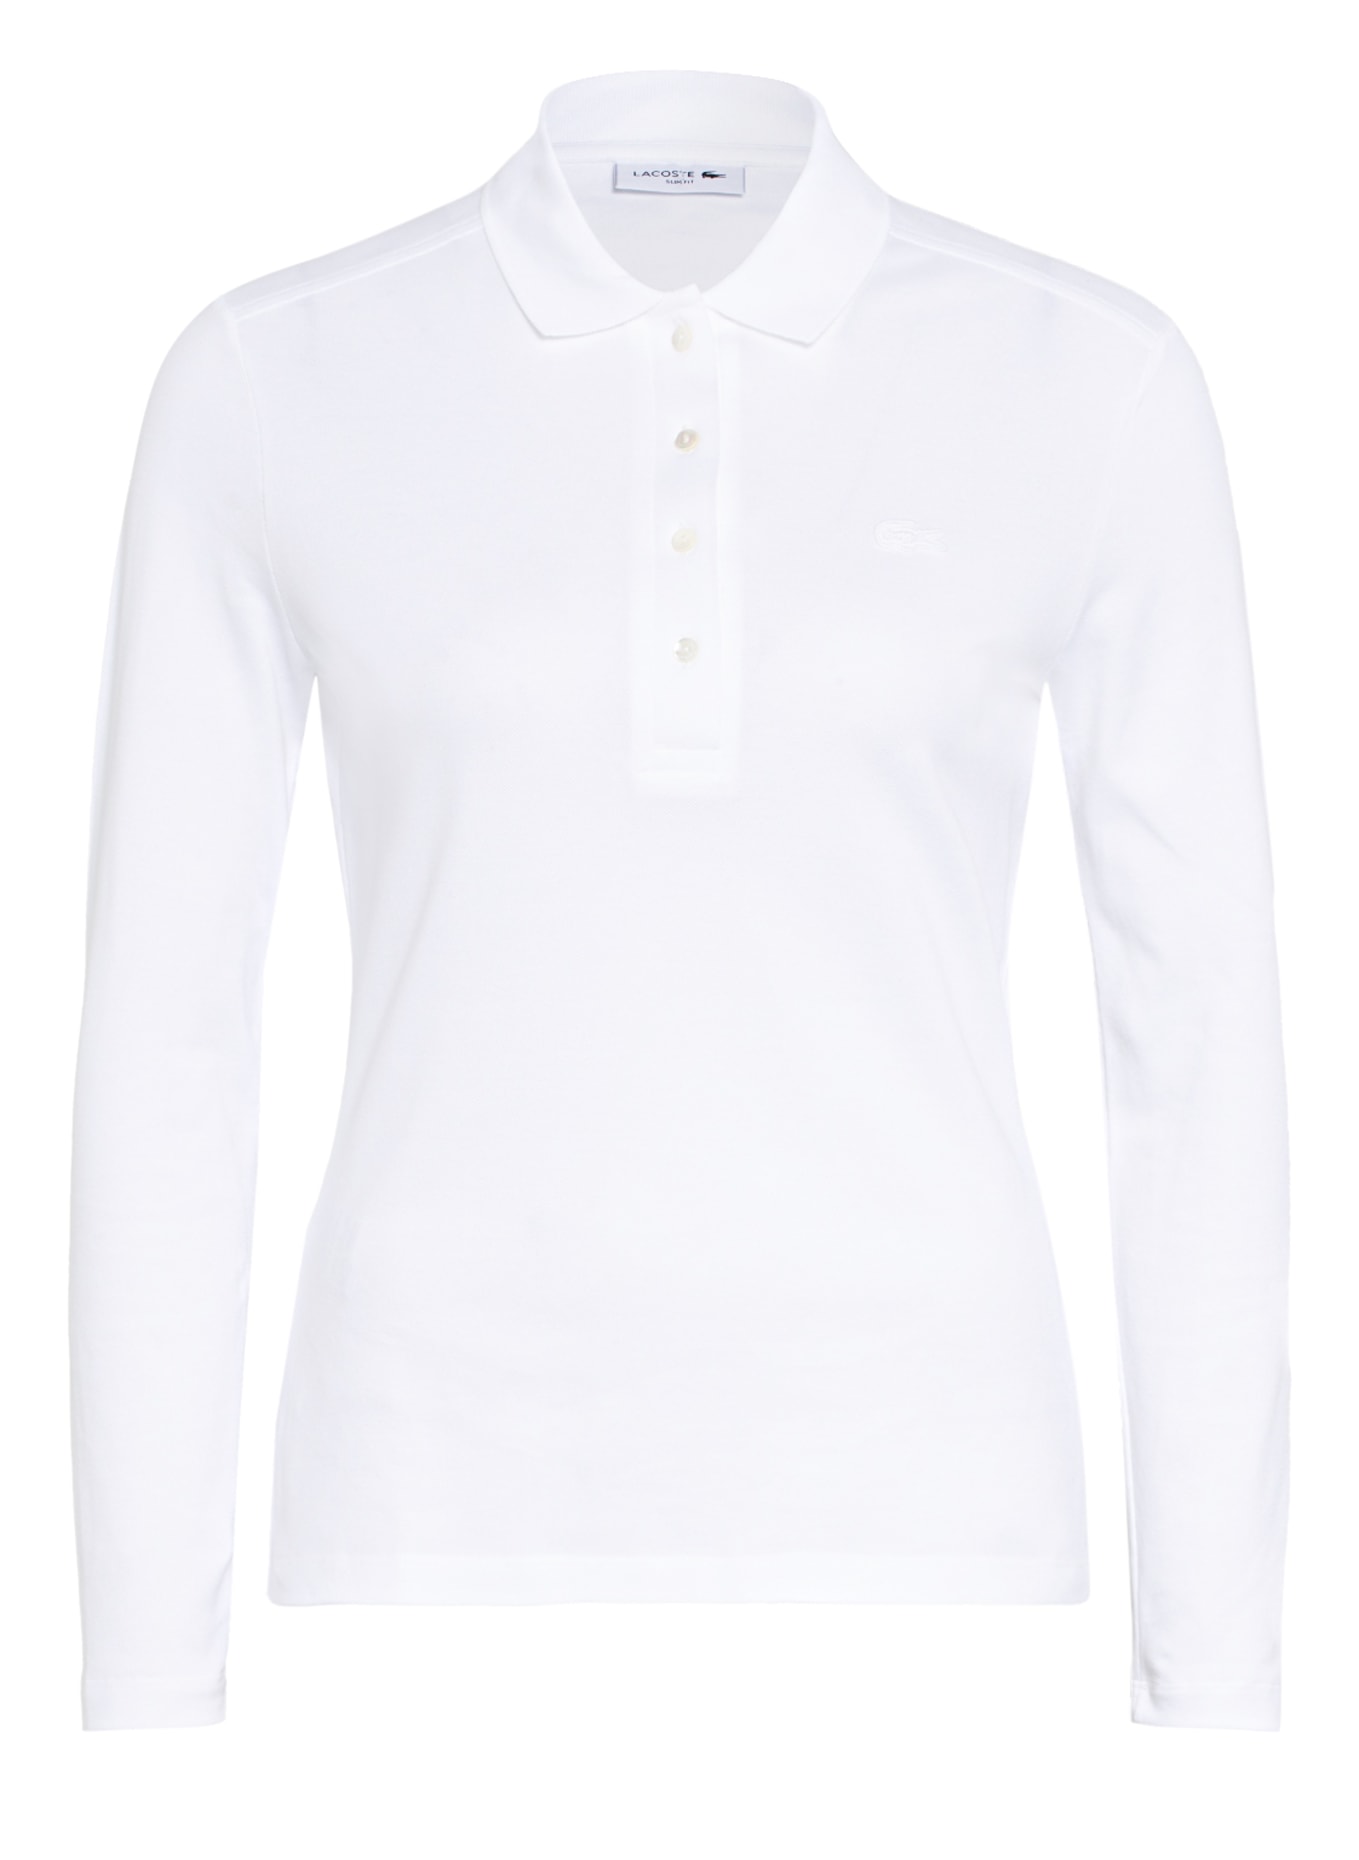 LACOSTE Piqué-Poloshirt, Farbe: WEISS (Bild 1)